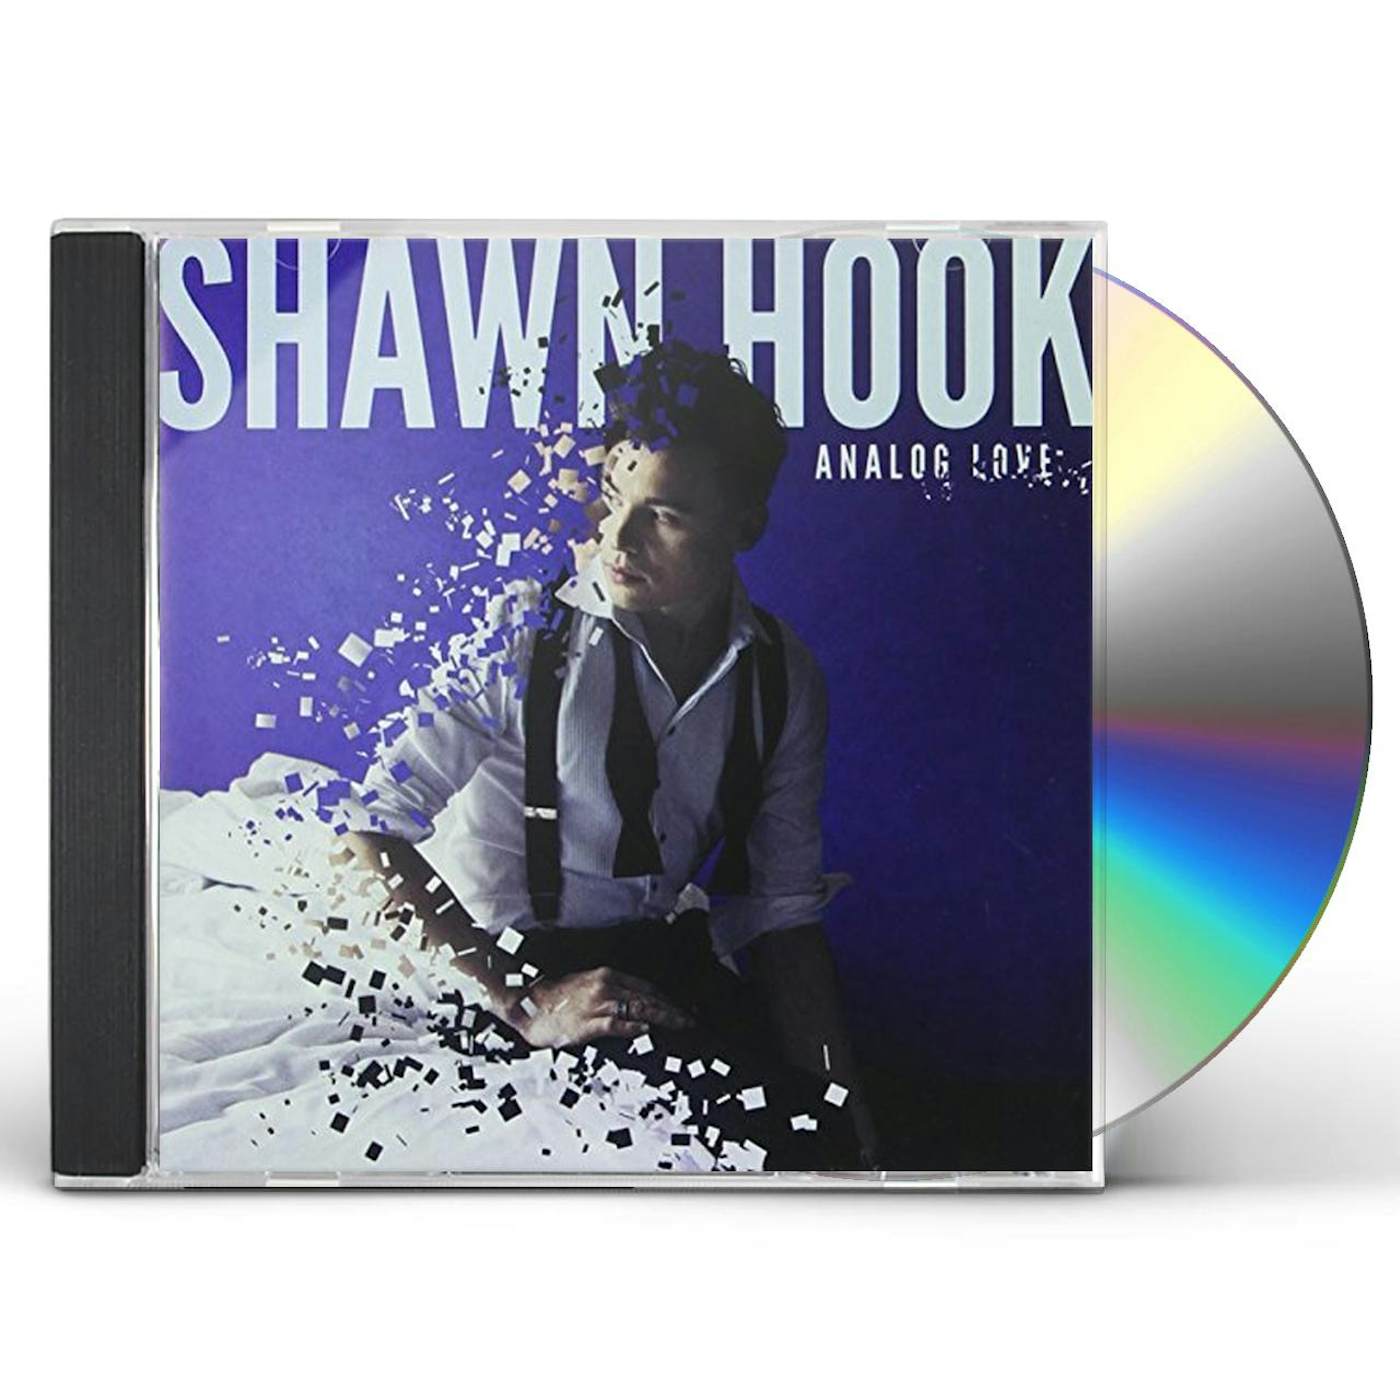 Shawn Hook ANALOG LOVE CD